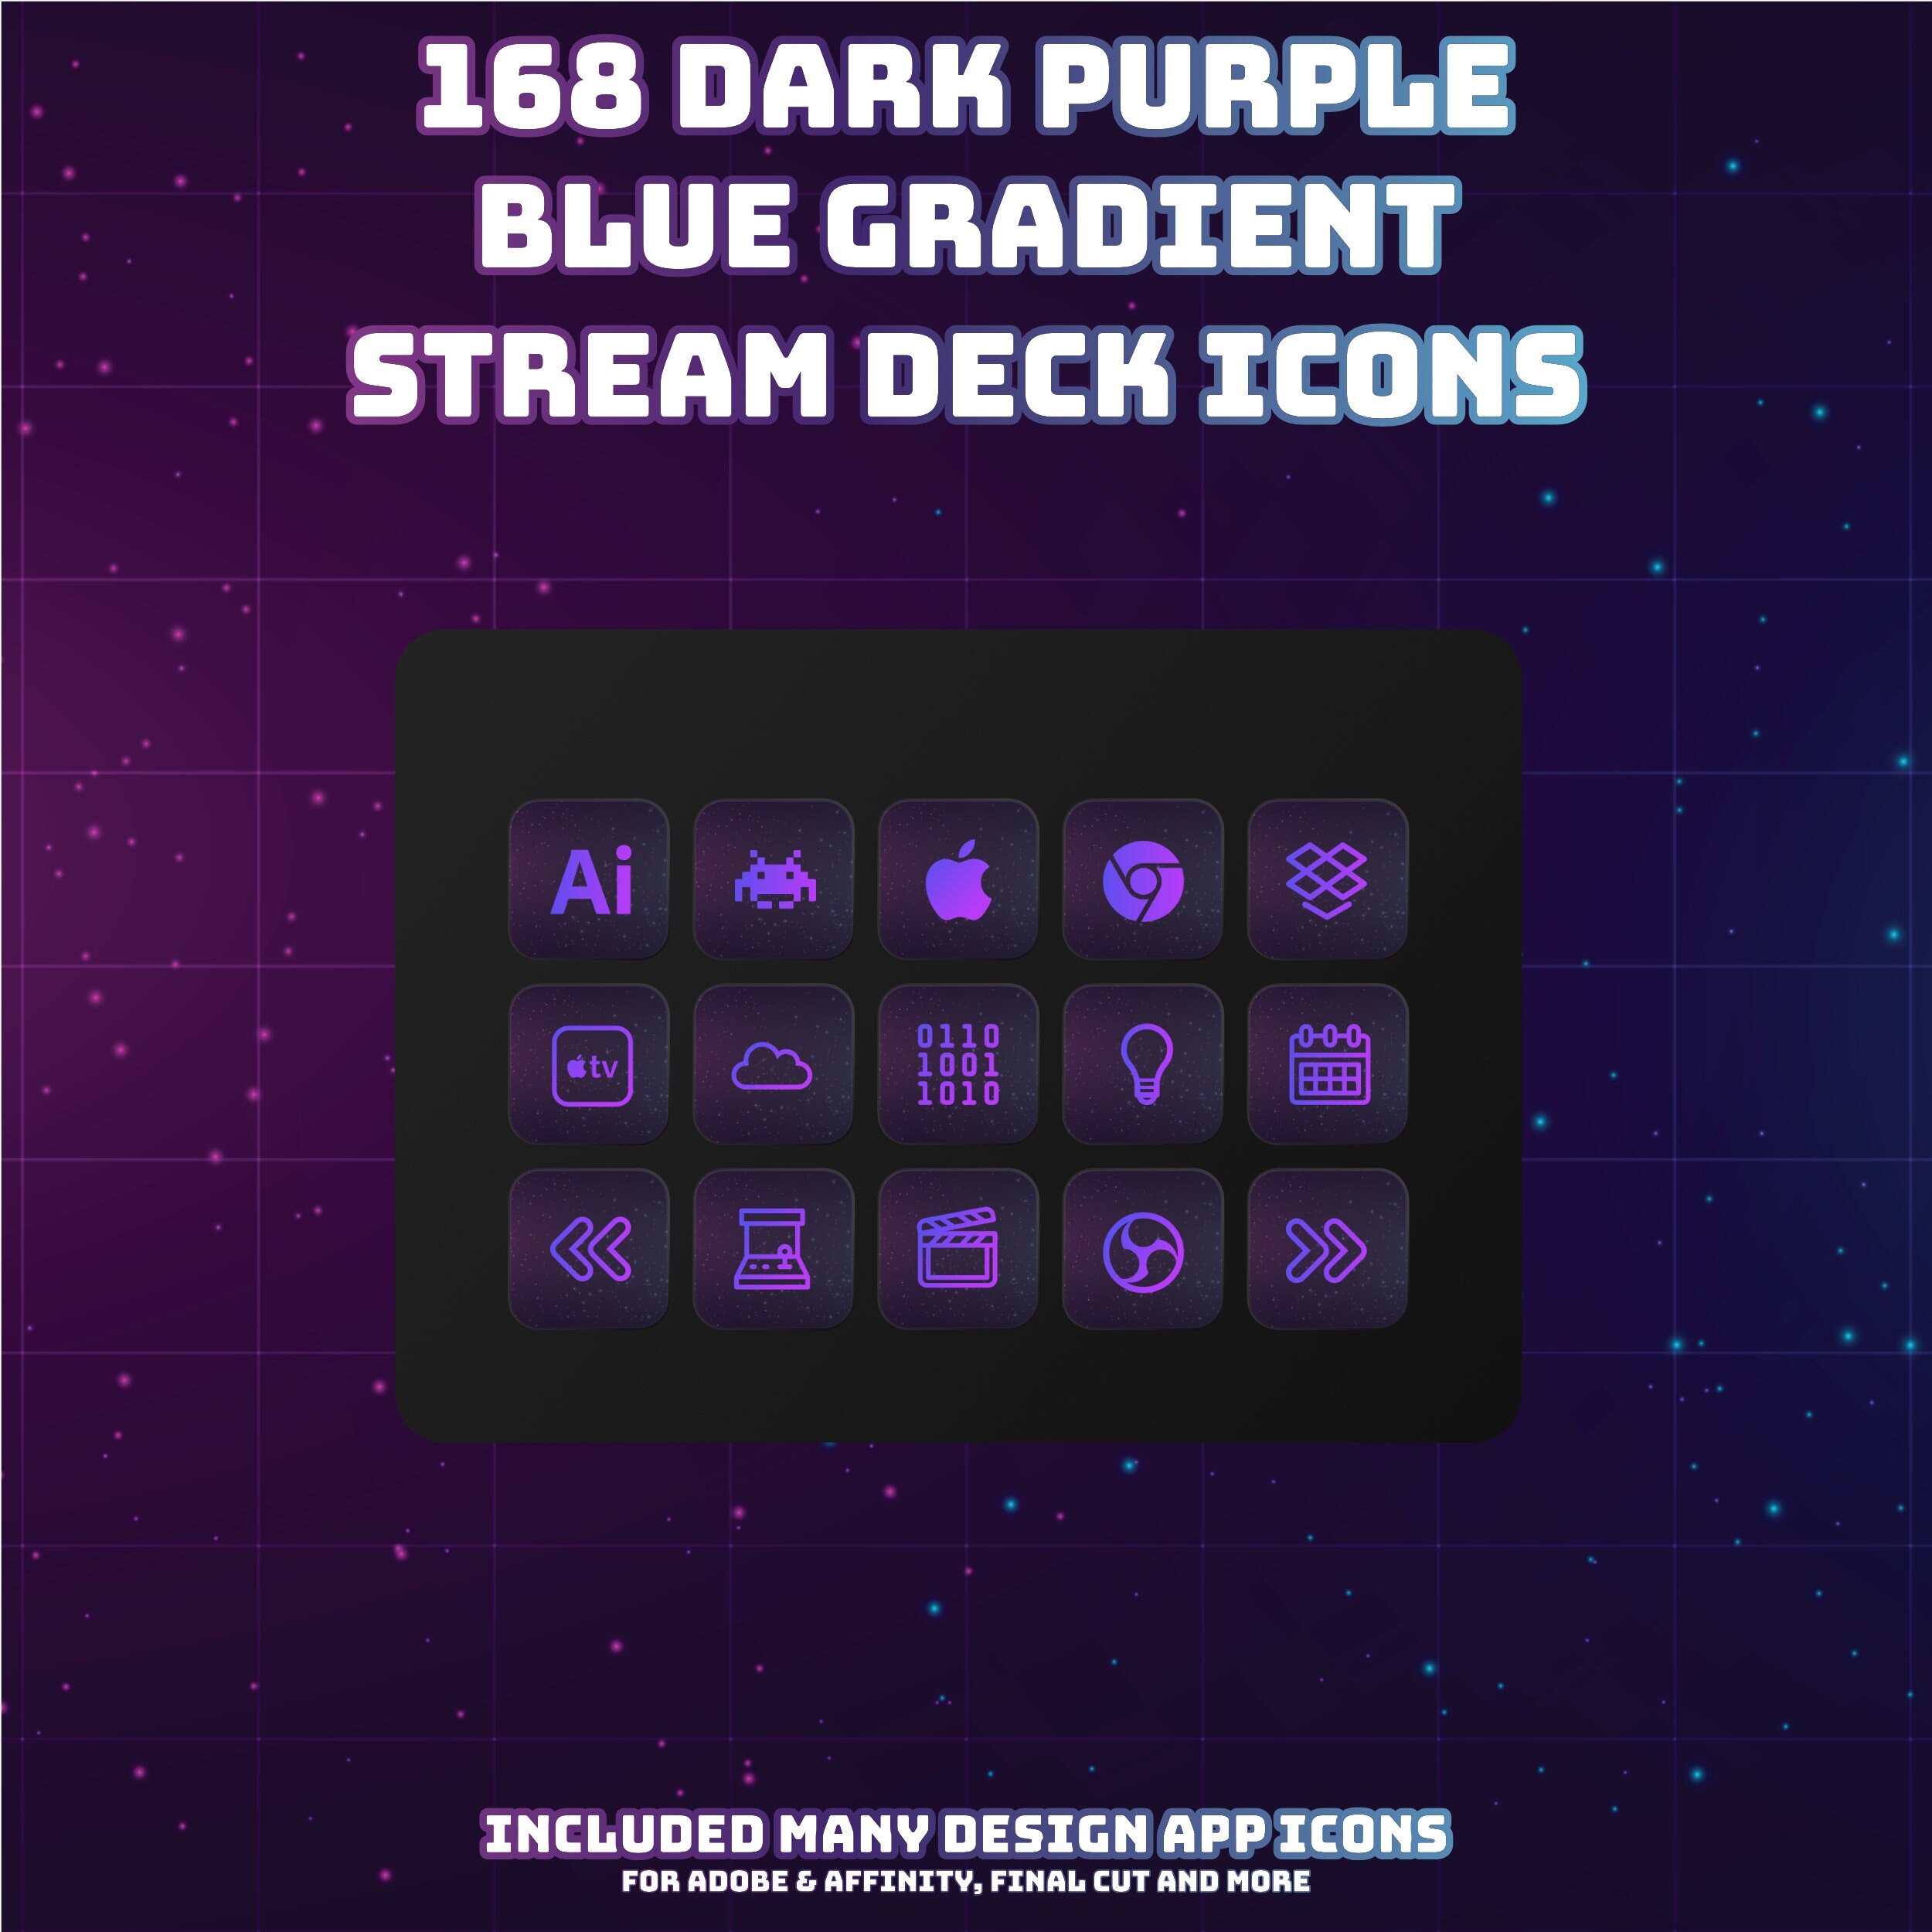 Streamdeck Icons 168 Dark Blue Purple Gradient on Star - Etsy